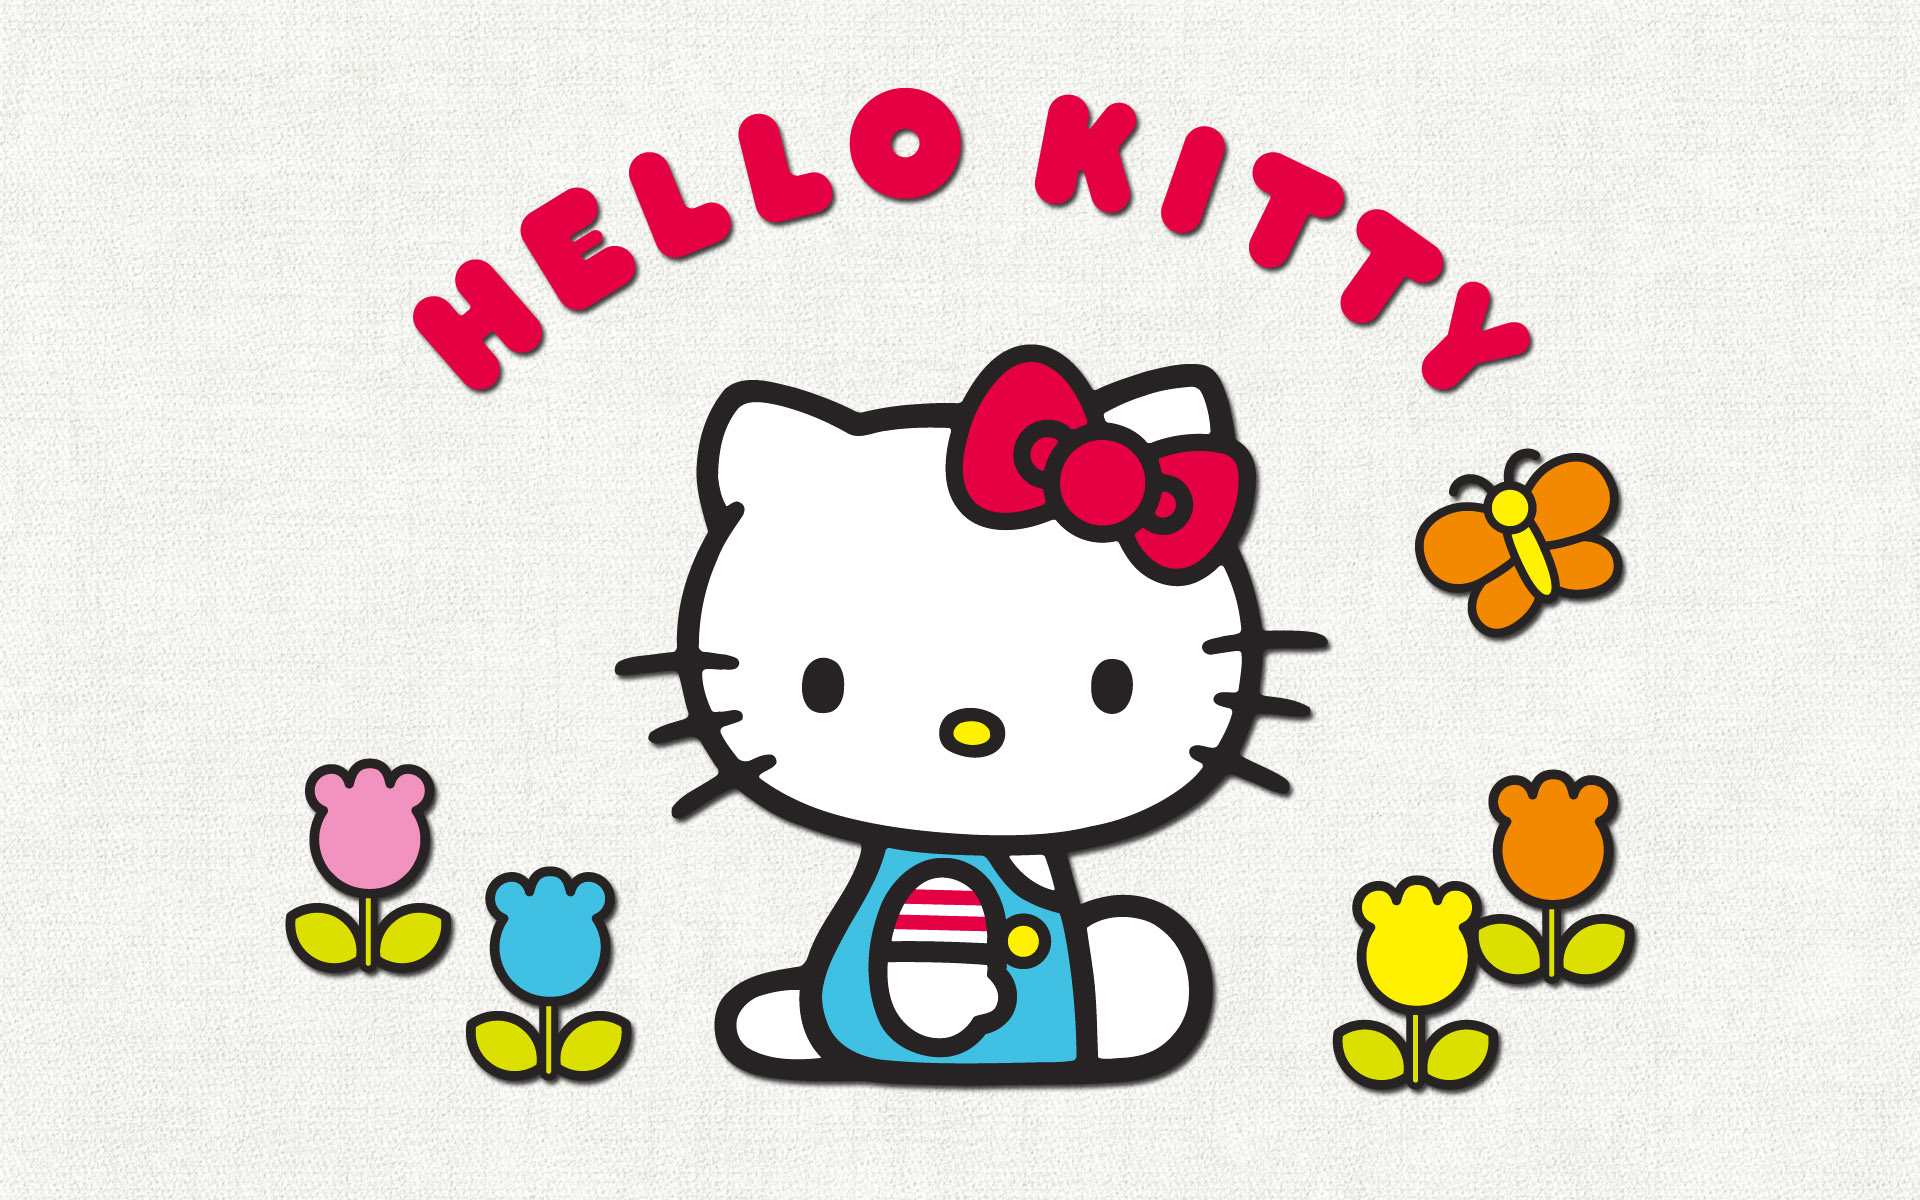 Hello Kitty可爱卡通形象手机壁纸_电脑主题网